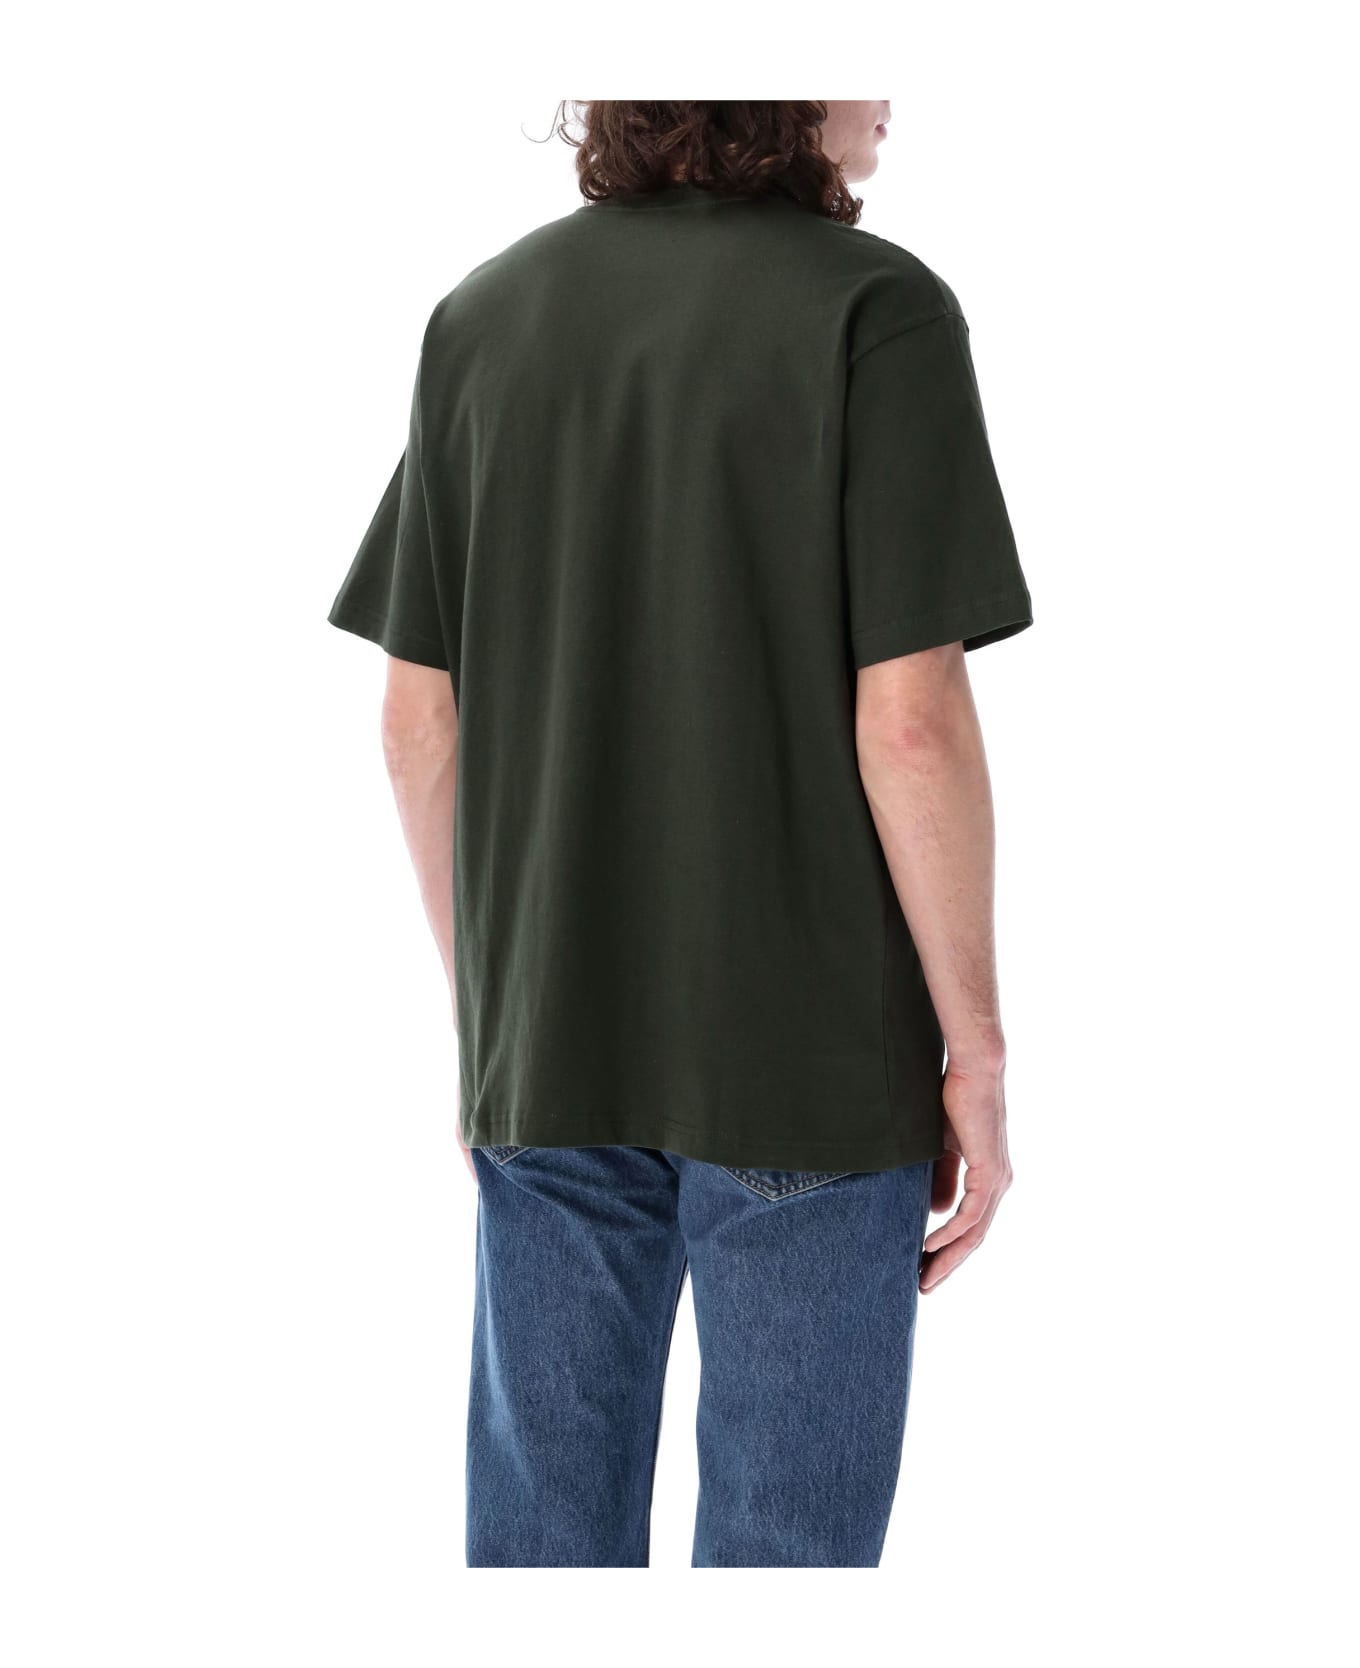 Filson Embroidered Pocket T-shirt - DK GREEN